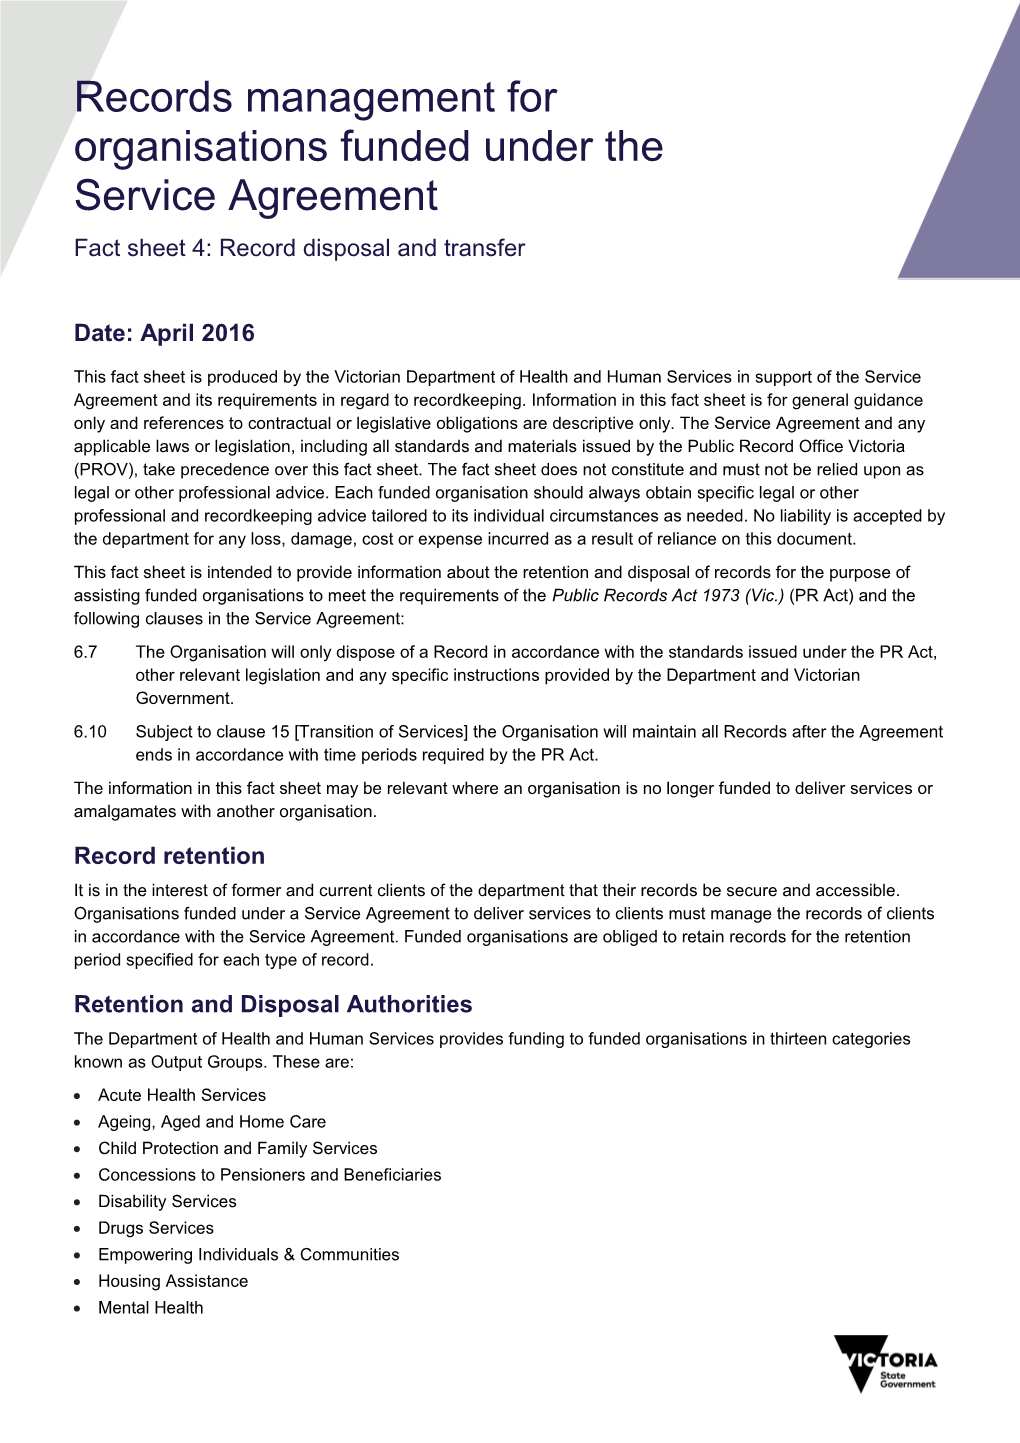 Fact Sheet 4: Record Disposal and Transfer